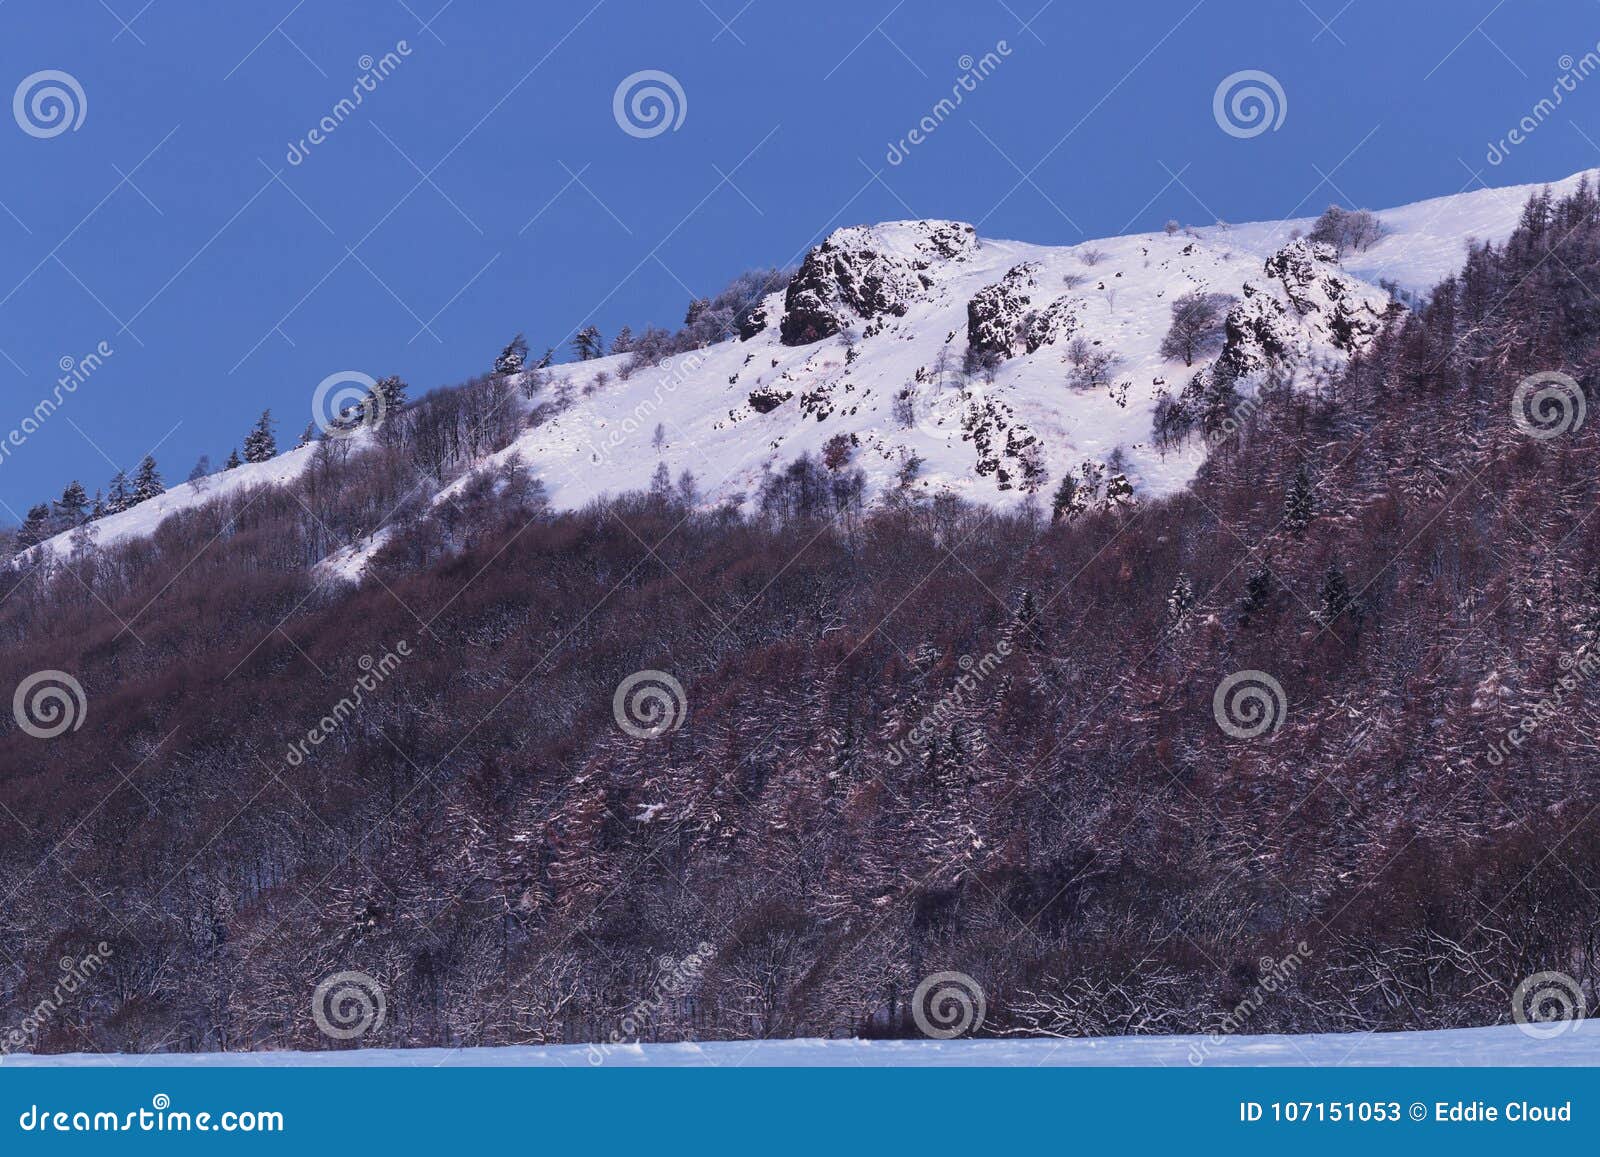 the wrekin hill summit in snow at winter